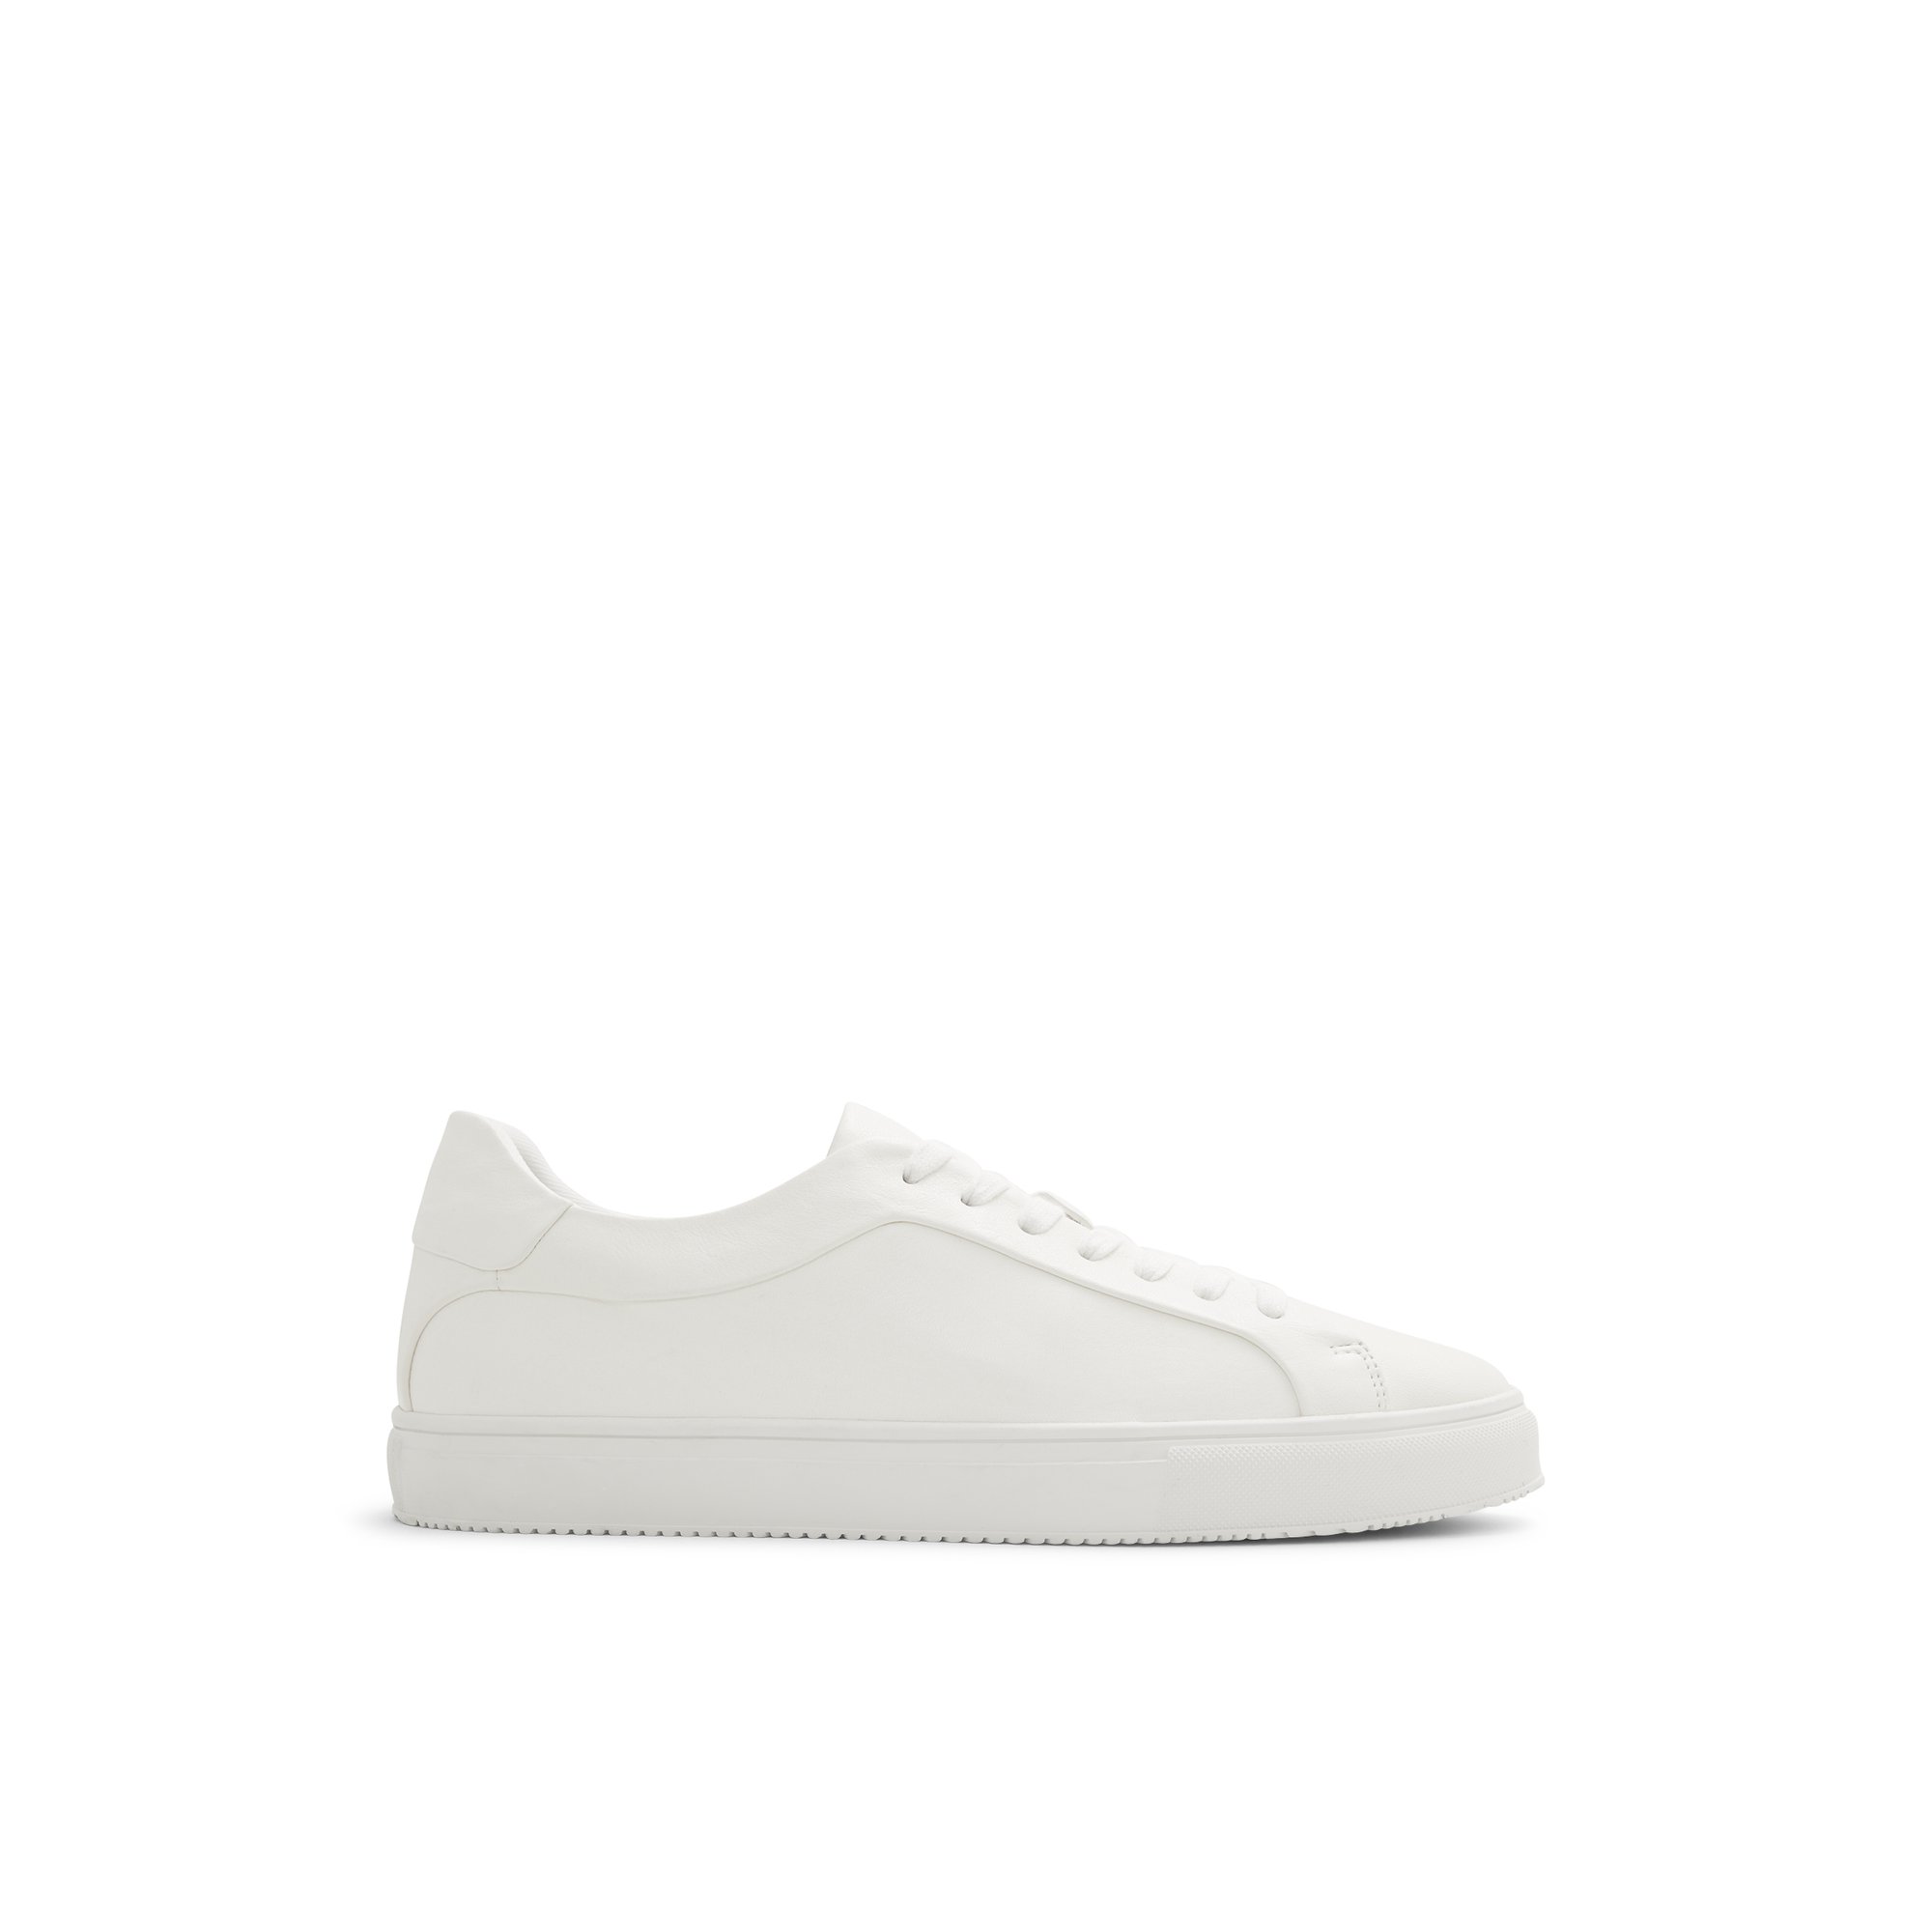 ALDO Cobi - Men's Low Top Sneakers - White